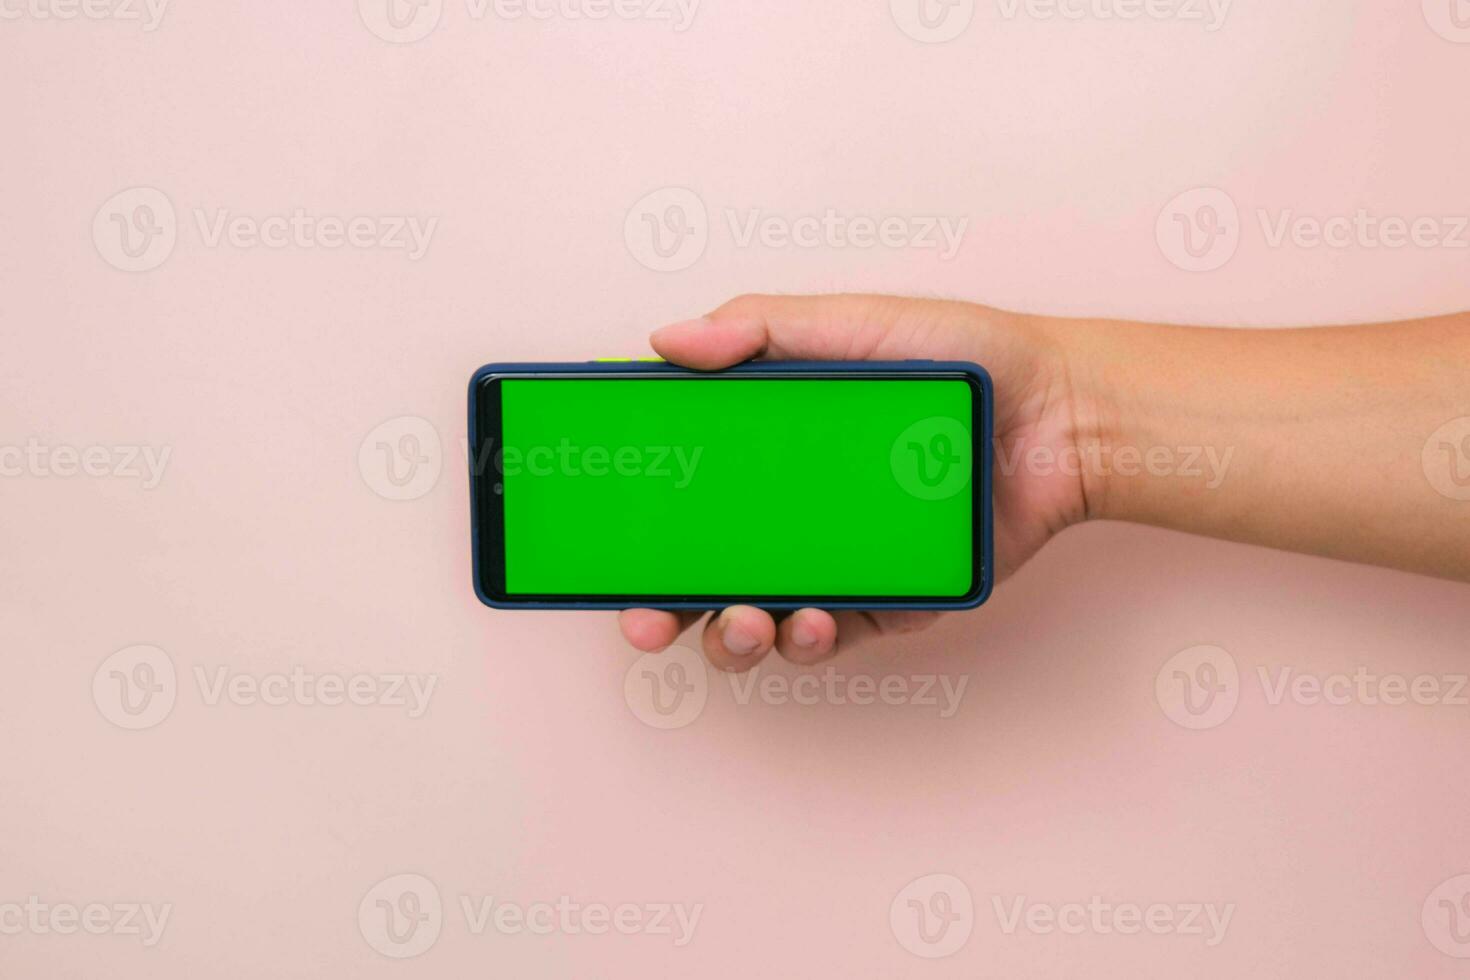 humano mano participación móvil teléfono inteligente con verde pantalla en horizontal posición aislado en rosado antecedentes. foto